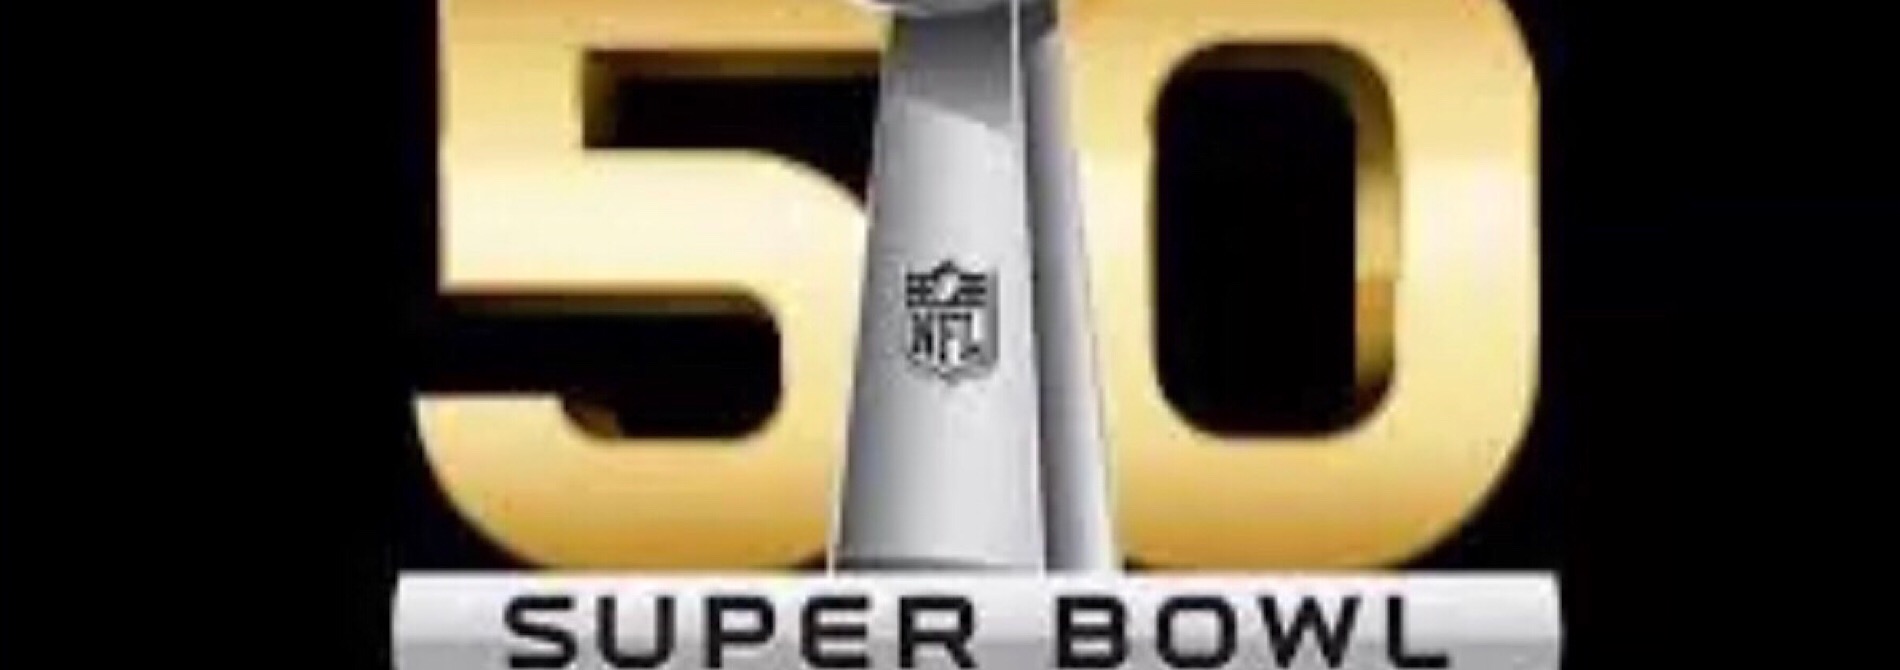 super bowl 50 logo